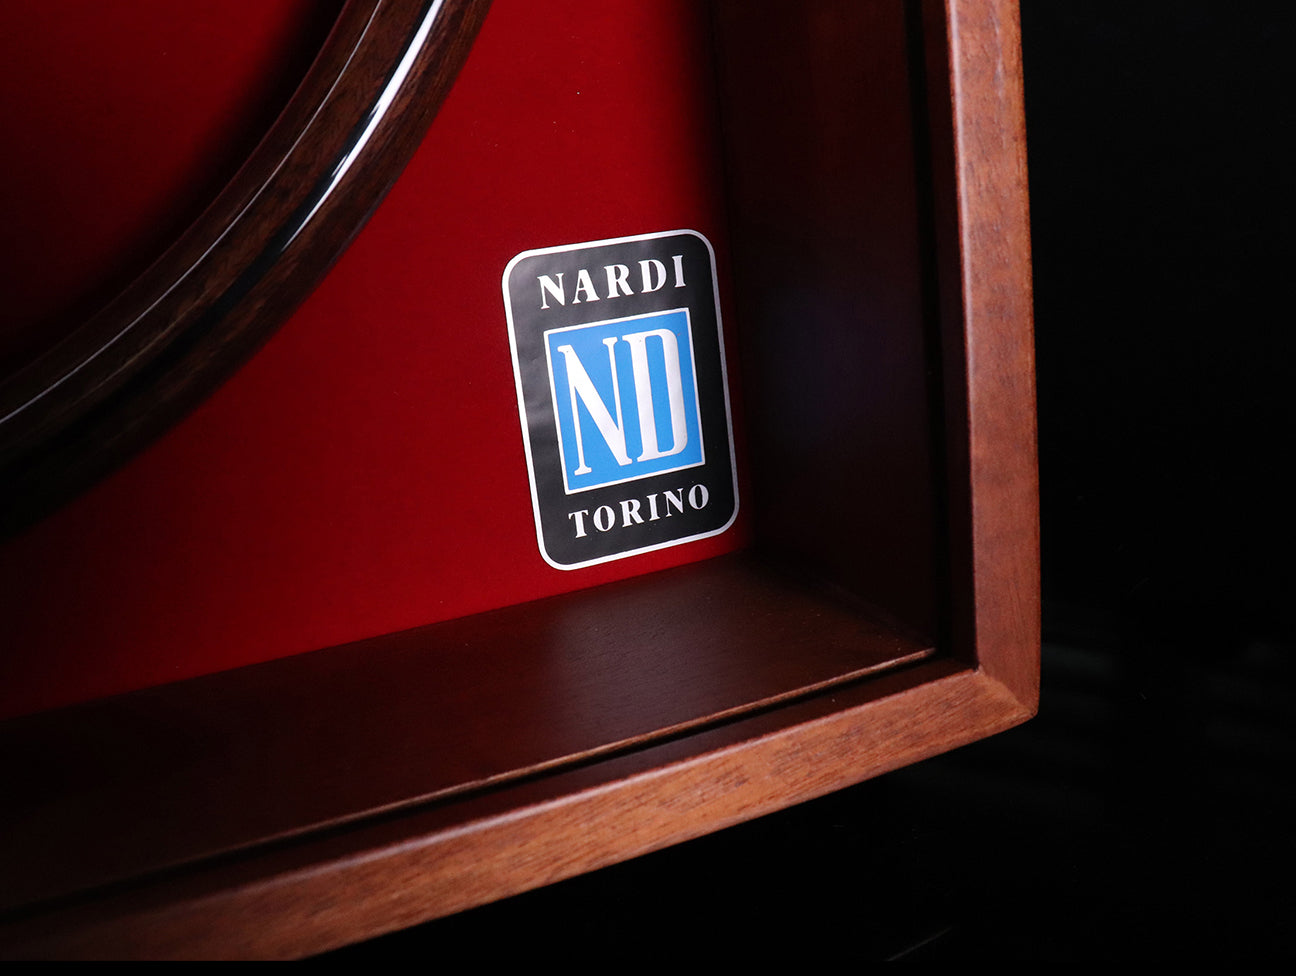 Nardi Classic Wood 360mm Steering Wheel w/ Polished Spokes in Wooden Case